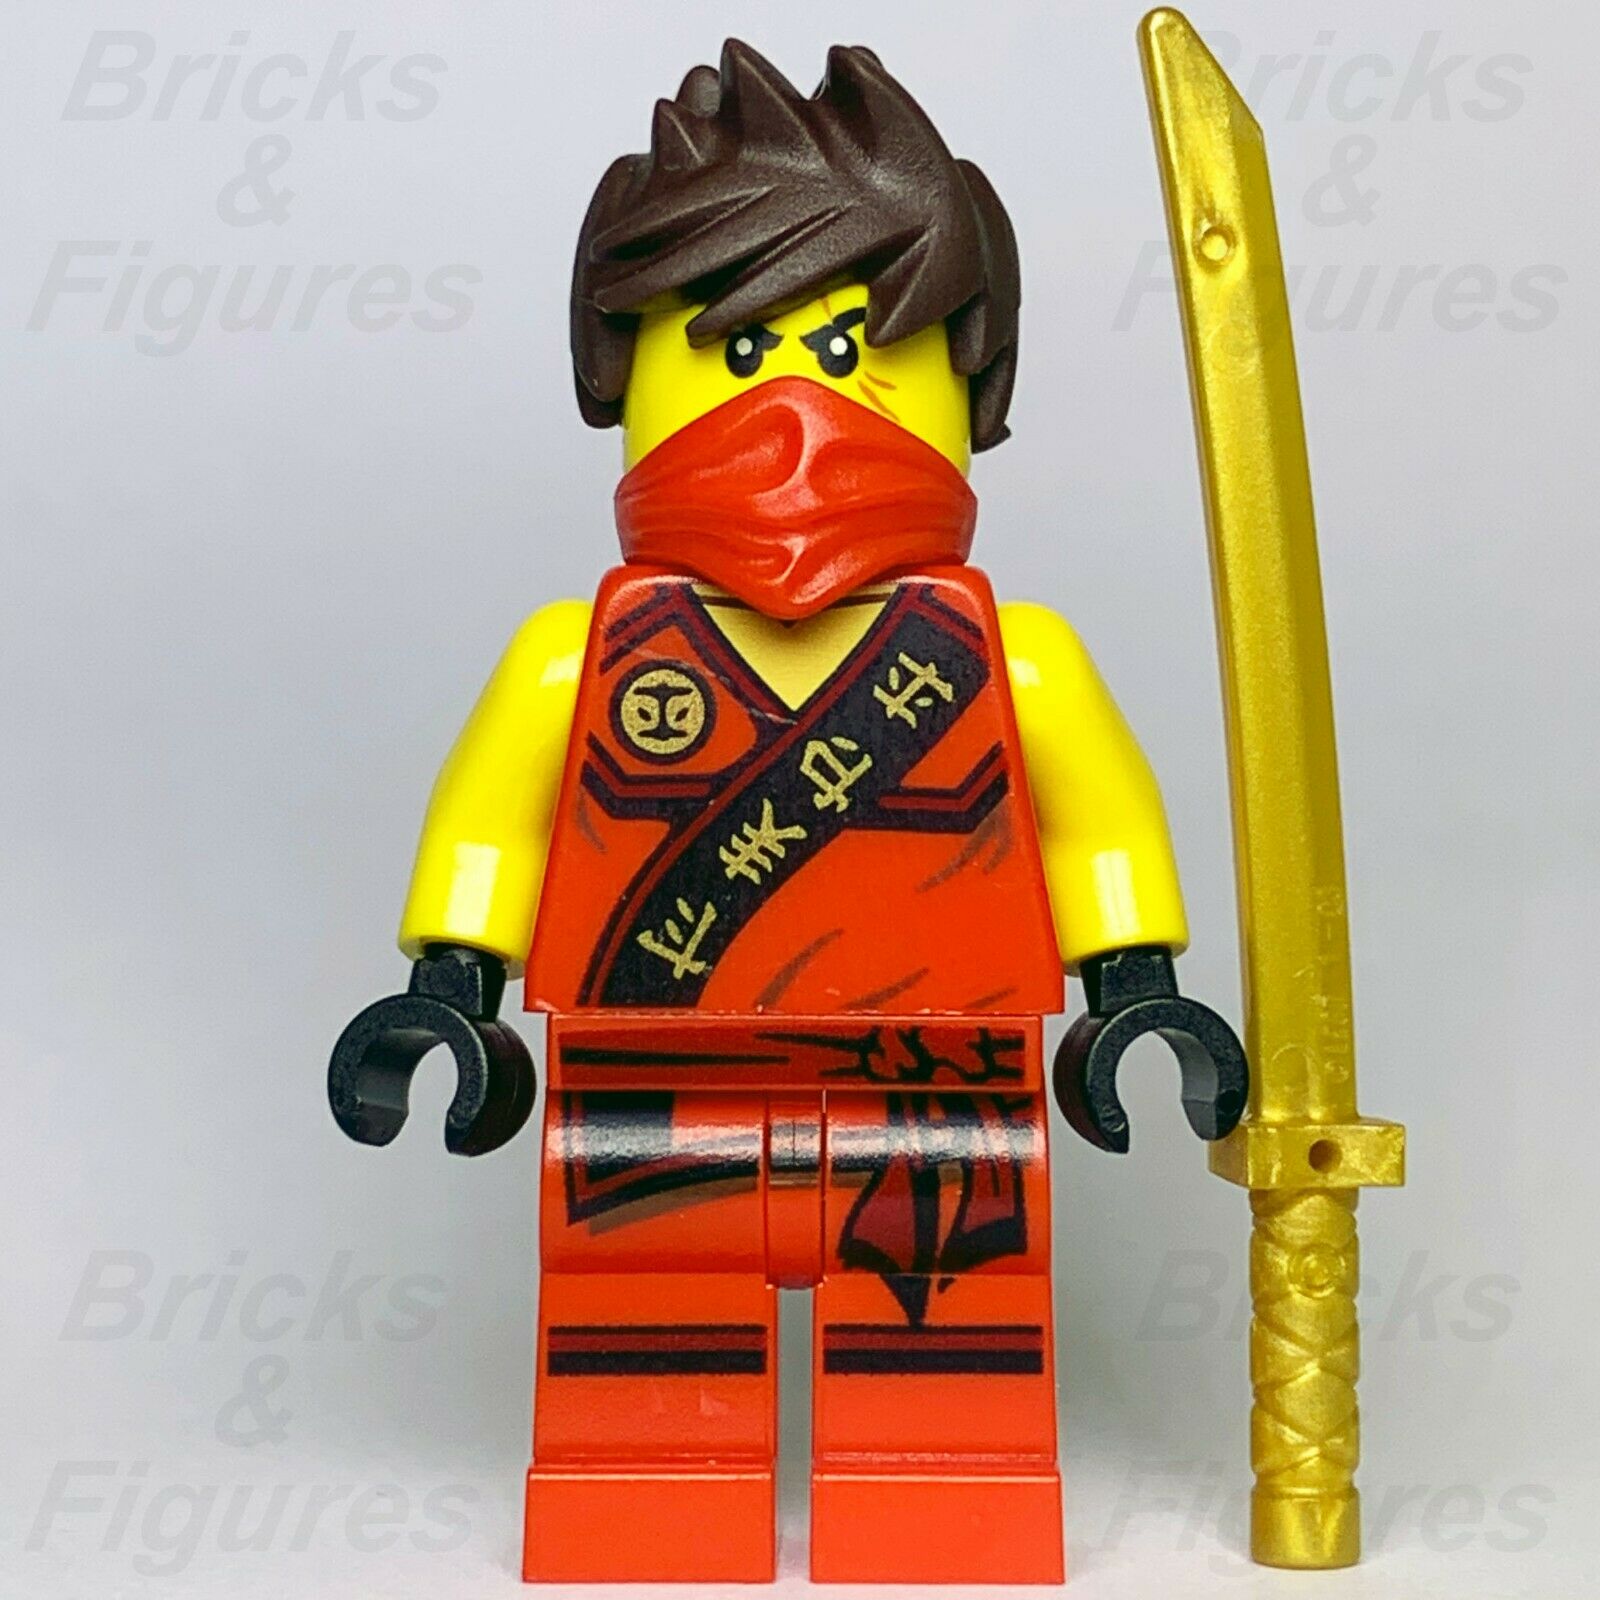 New Ninjago LEGO Red Fire Ninja Kai Minifigure from sets 70756 70752 30293 - Bricks & Figures